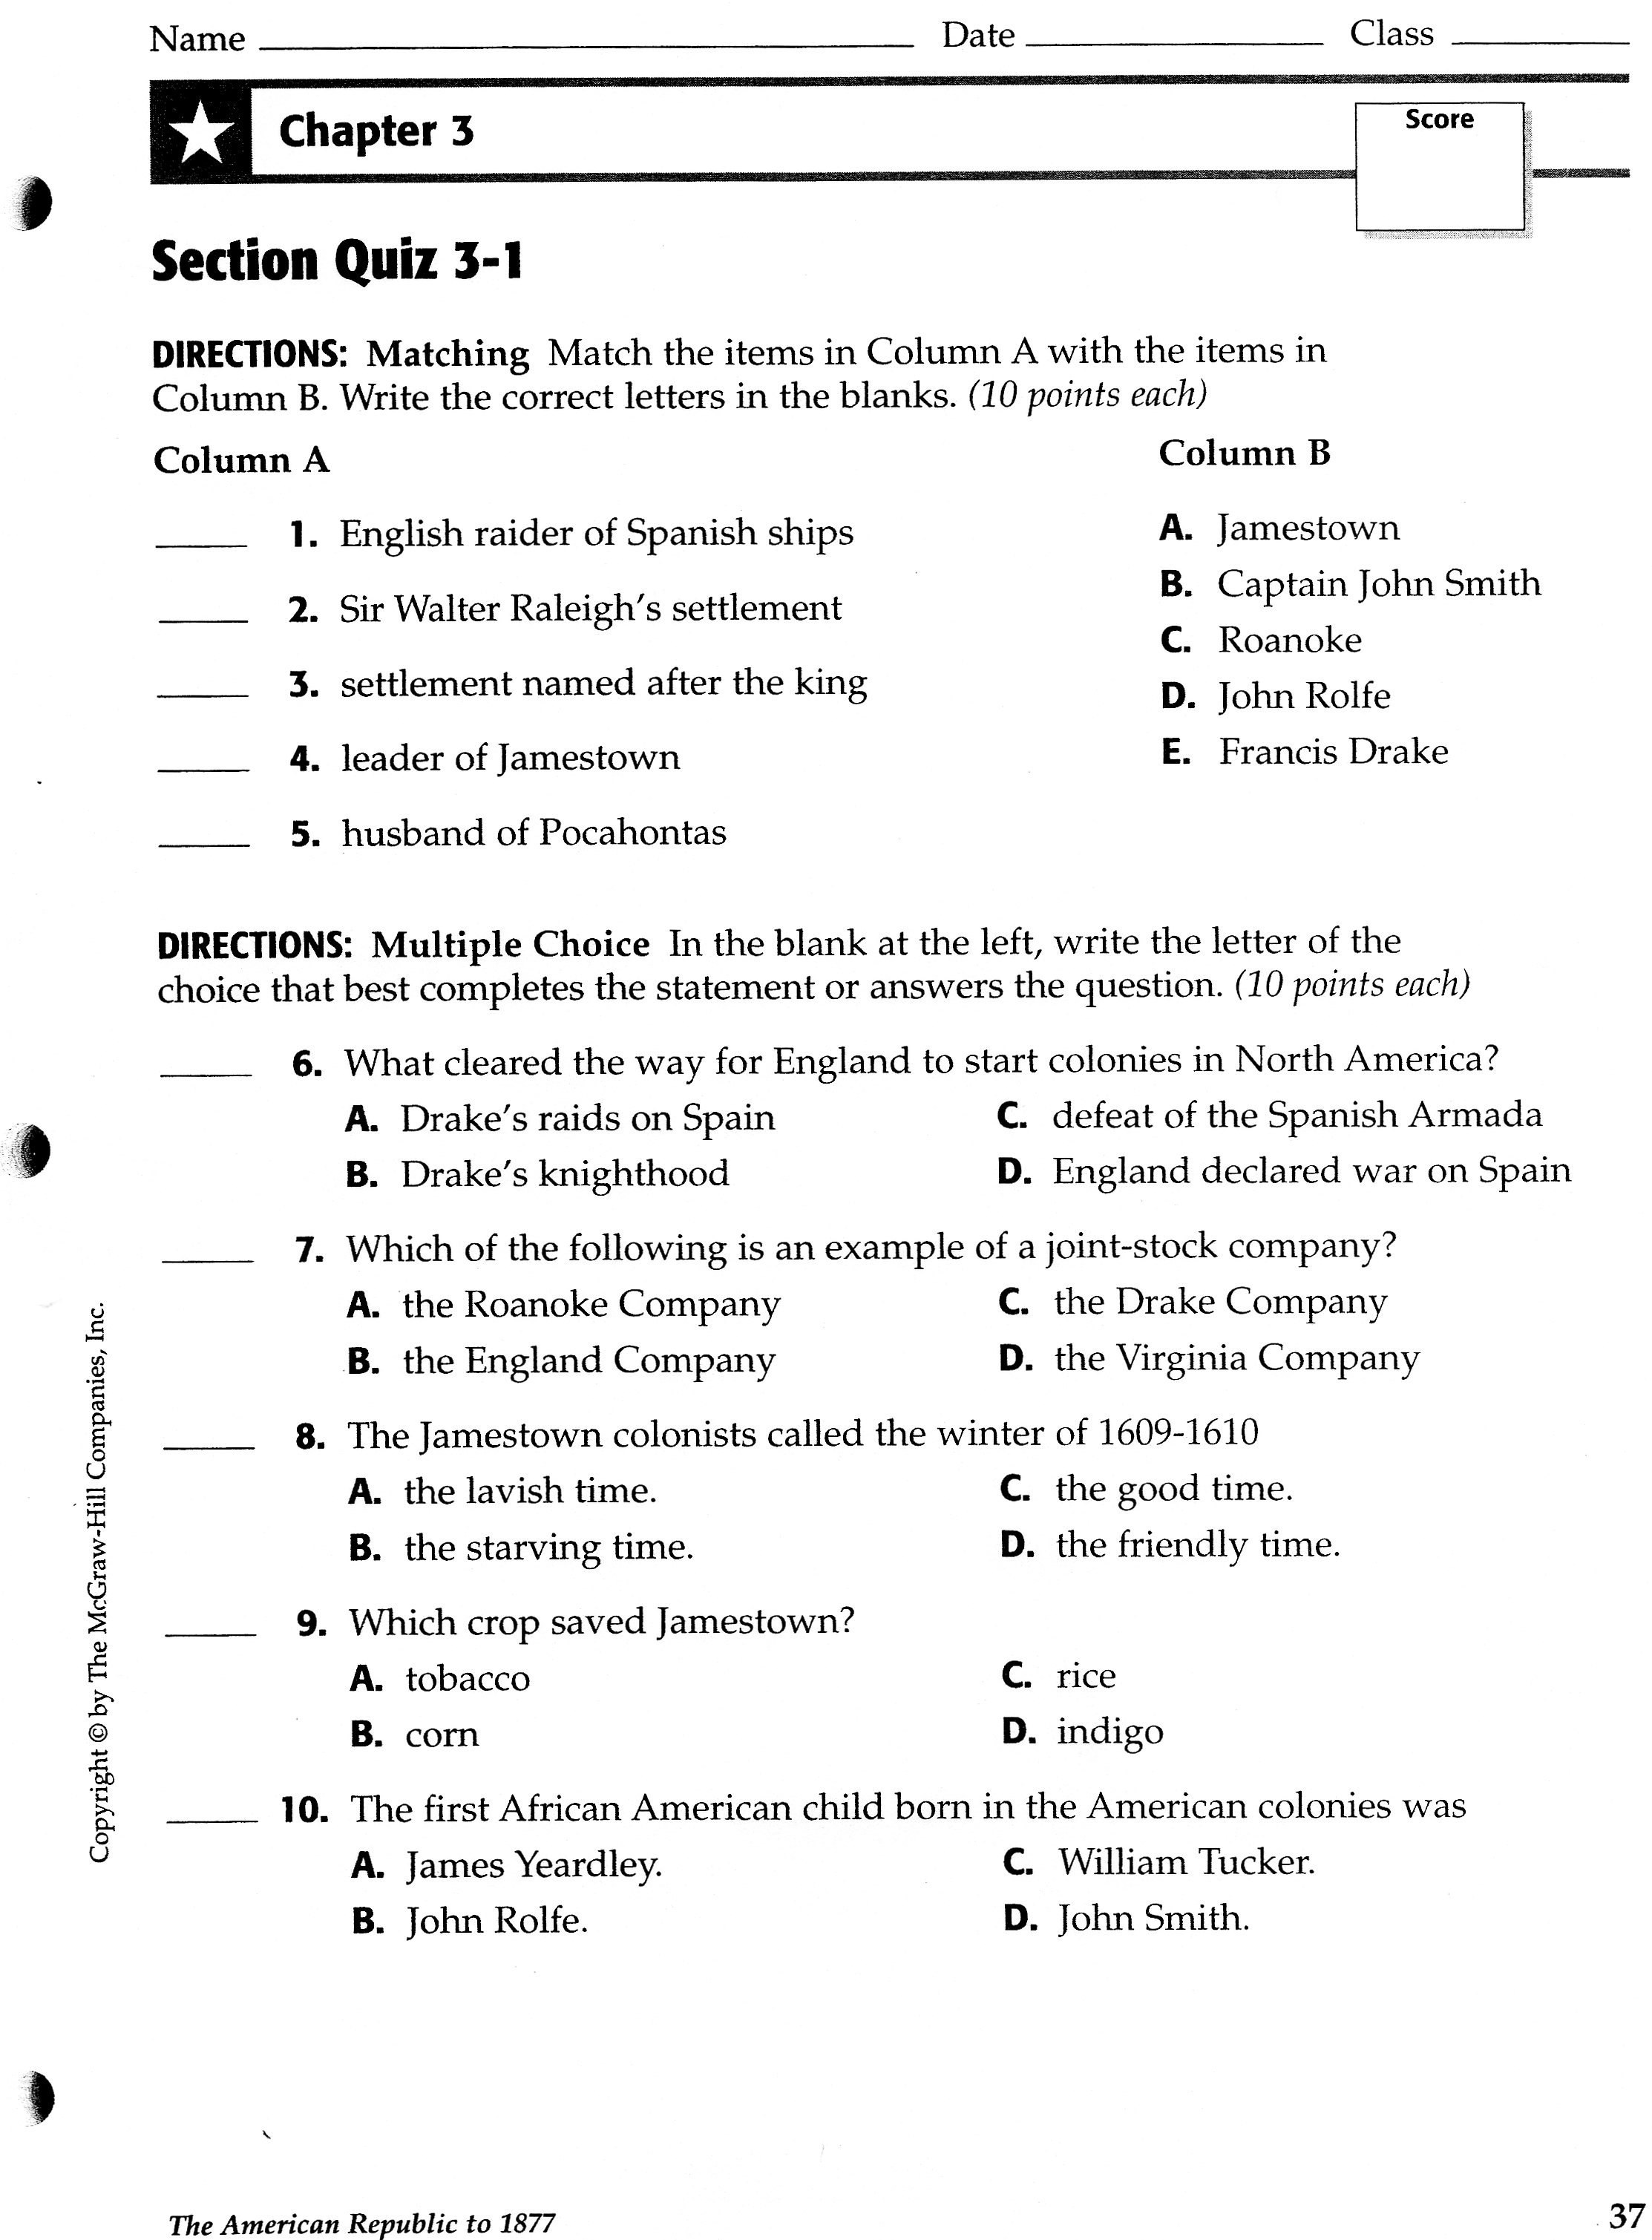 Free Printable Social Studies Worksheets For 7th Graders